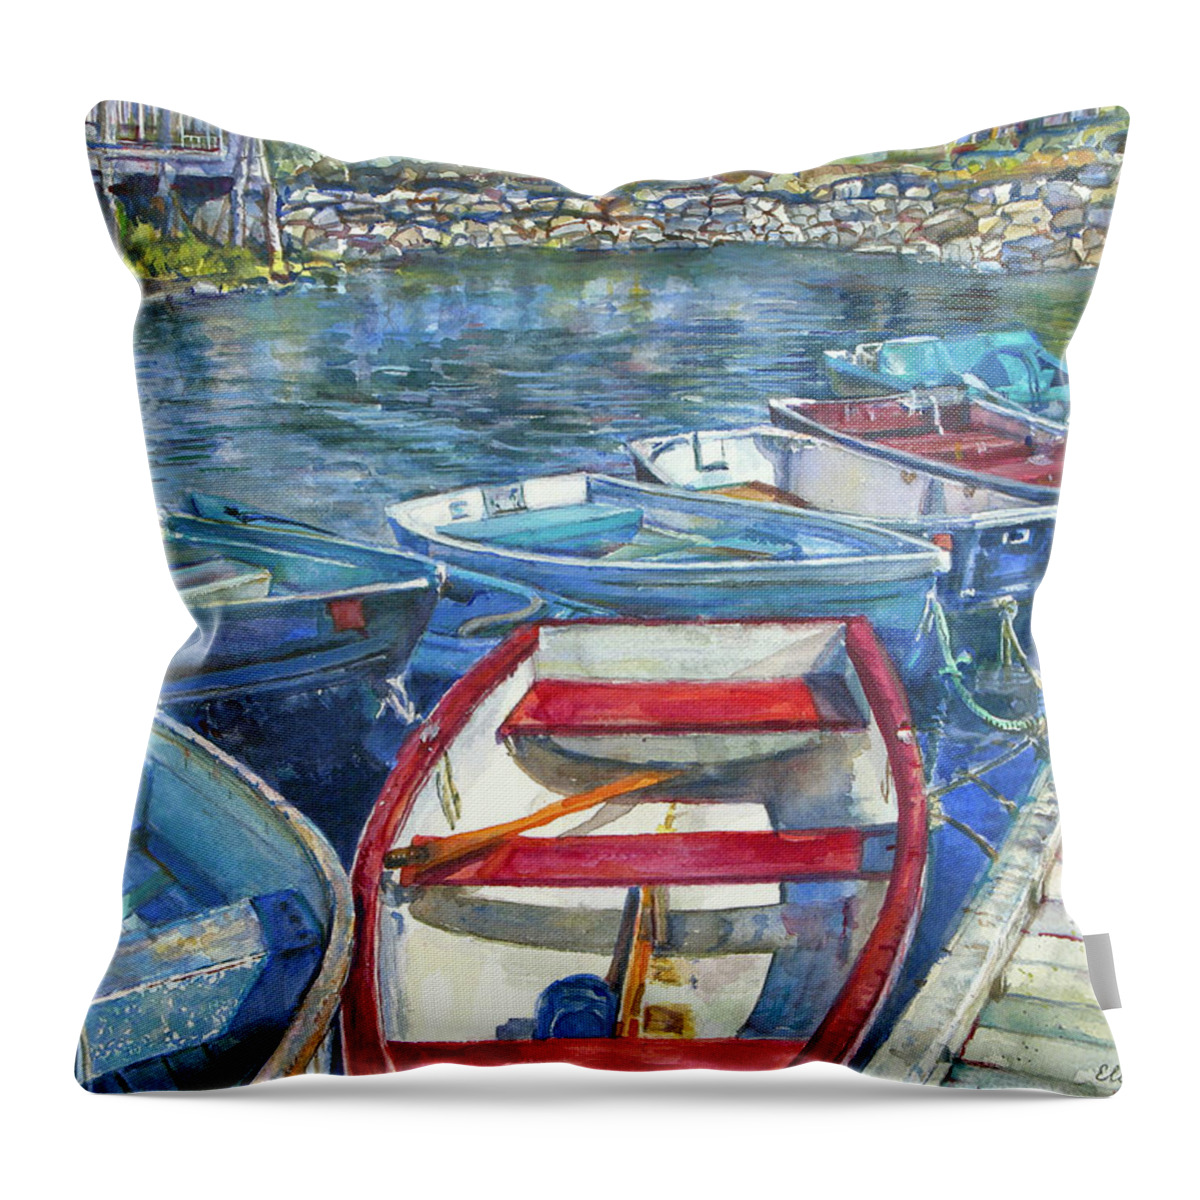 Damariscotta Throw Pillow featuring the painting Damariscotta Dinghies by Elizabeth Palmer